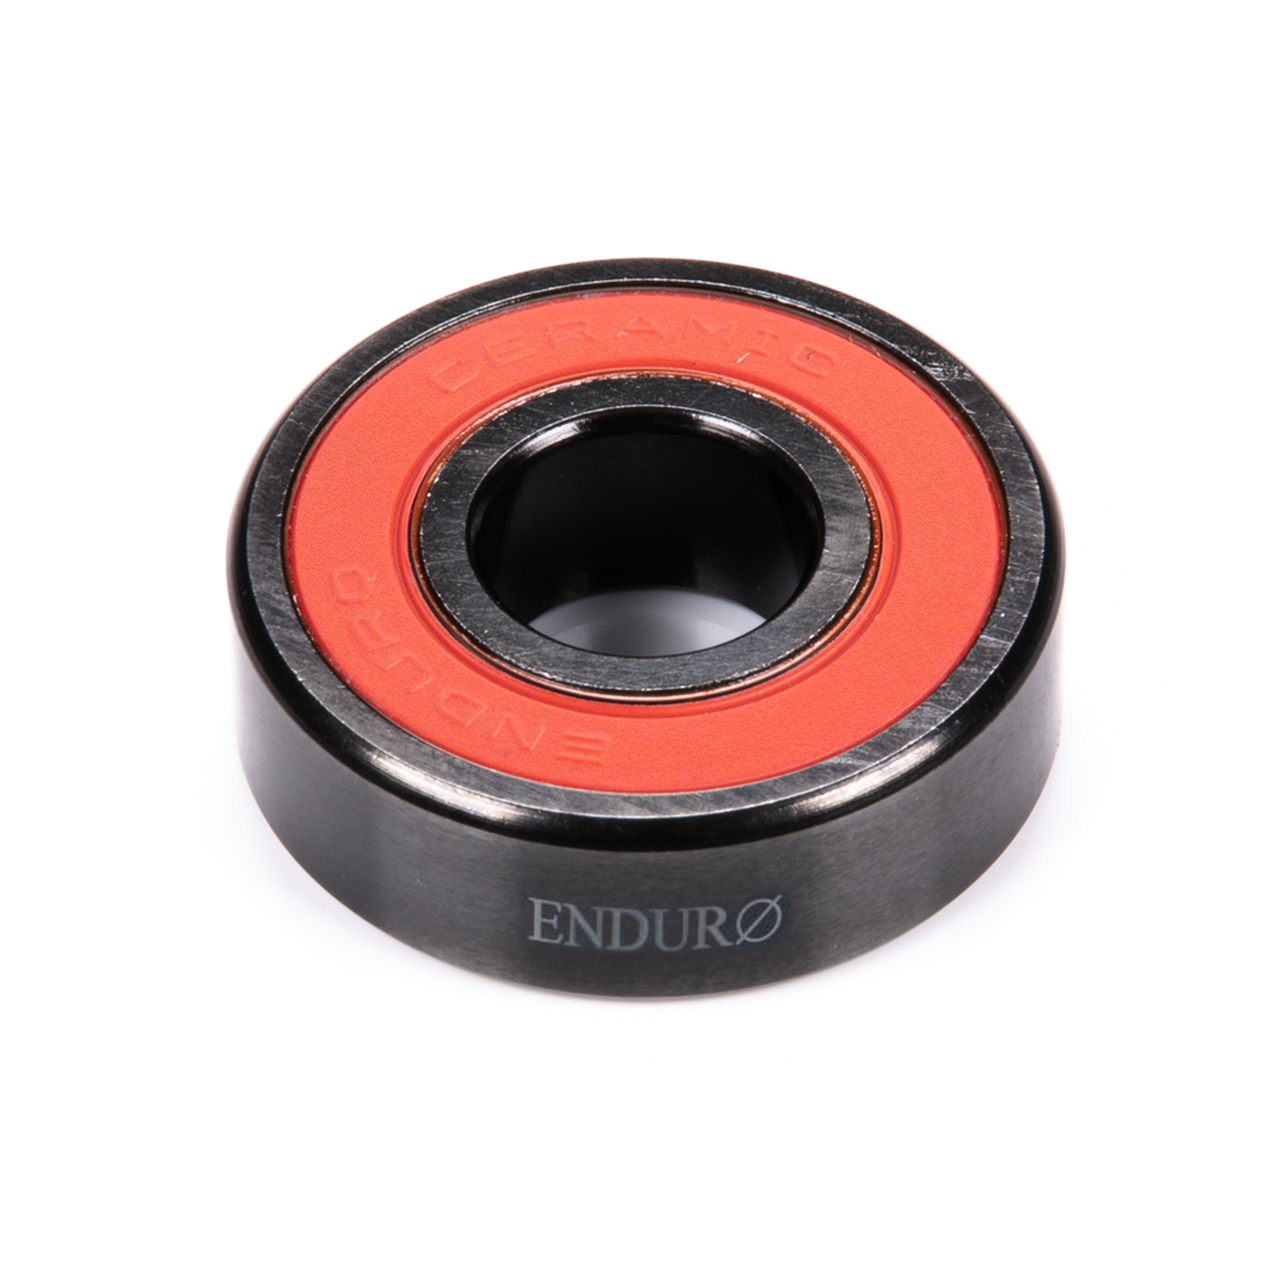 Enduro CO 608 VV - Enduro Zero, Black-Oxide, Ceramic Hybrid, ABEC-5, Radial Bearing (C3 Clearance) - 8mm x 22mm x 7mm